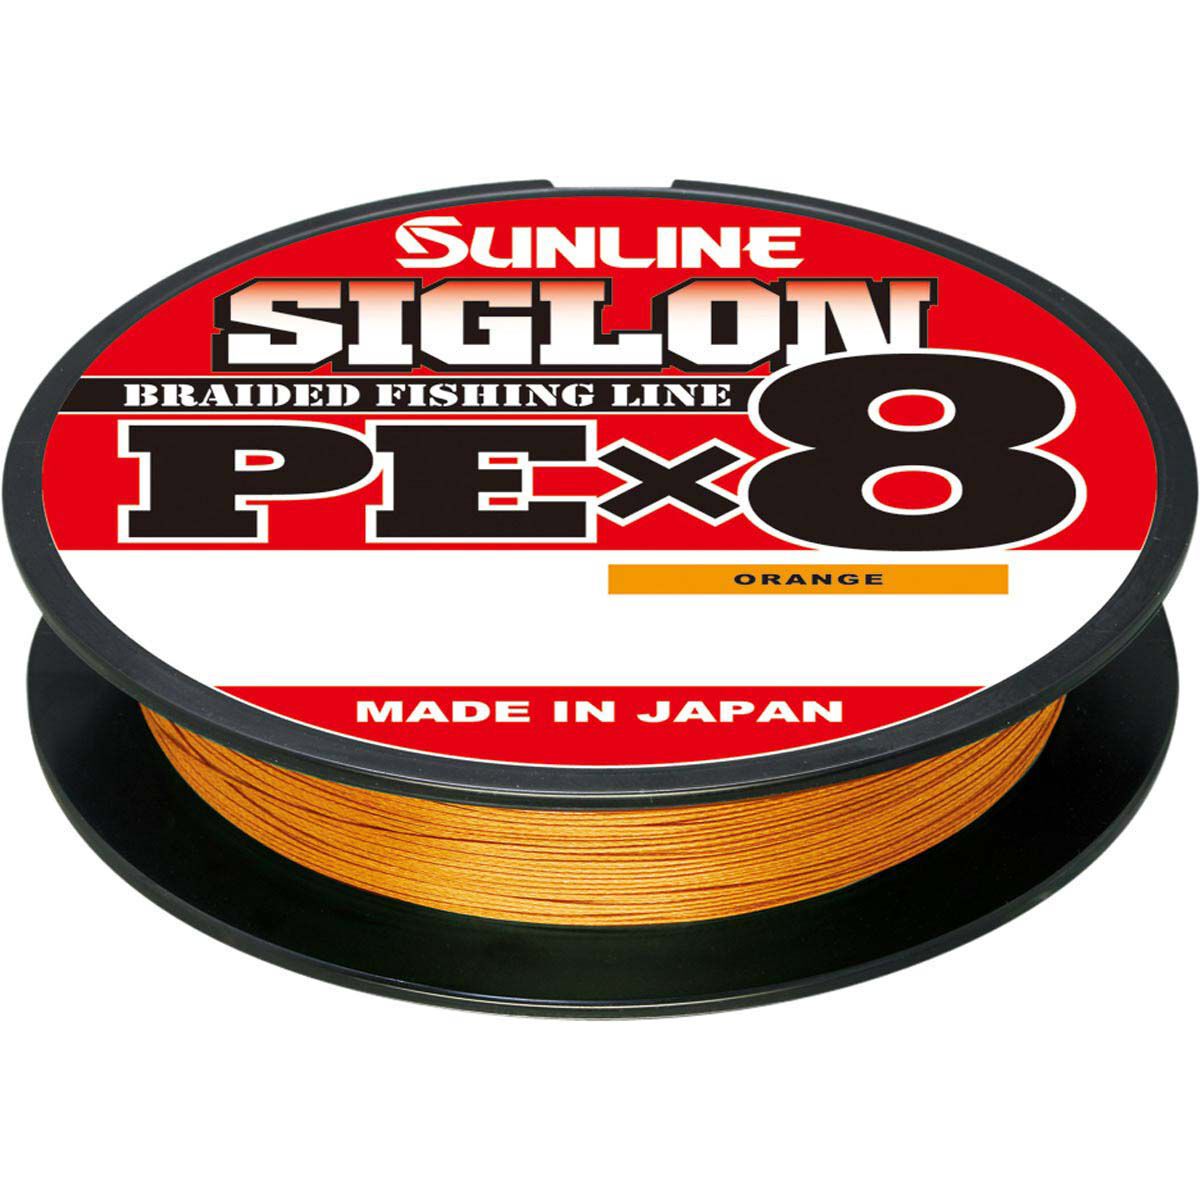 Sunline Siglon Orange Braid Line 150m 8lb